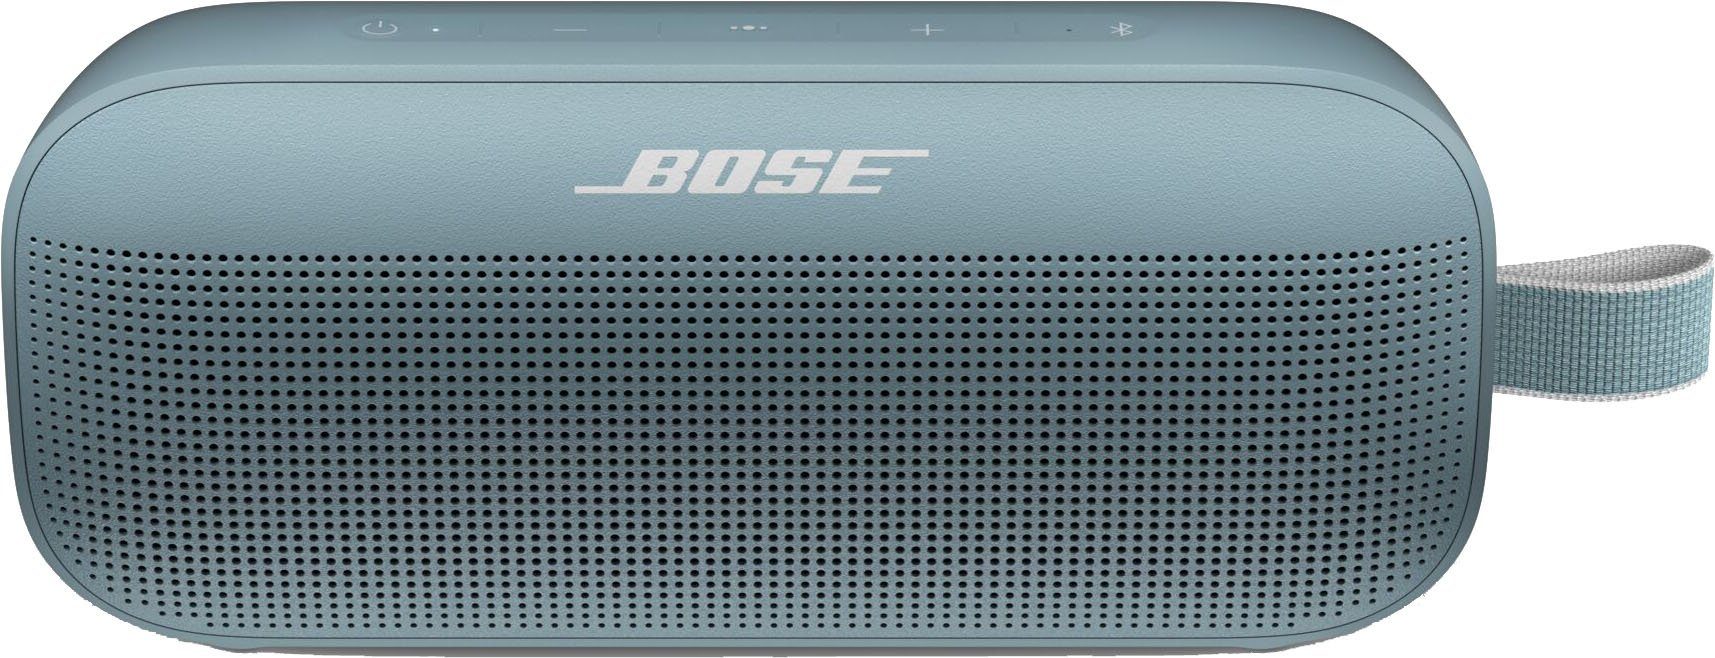 blau Lautsprecher (Bluetooth) Stereo Flex Bose SoundLink